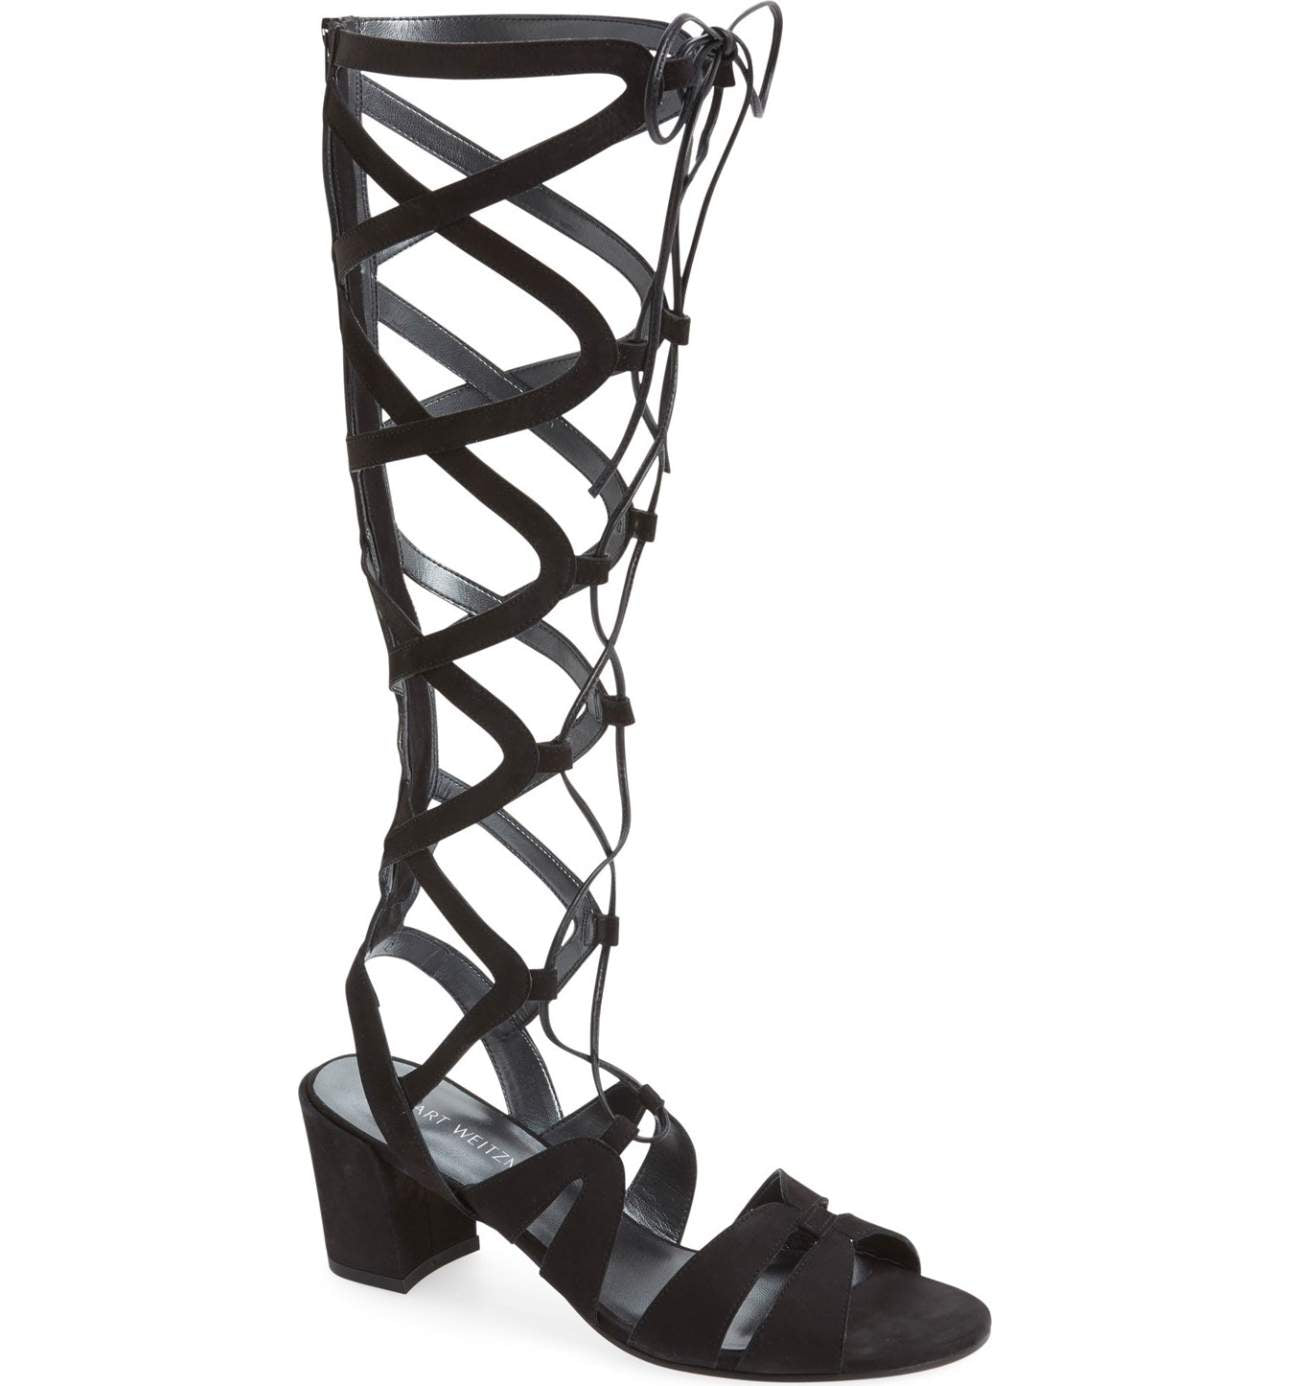 Stuart Weitzman Black Grecian Gladiator Sandals SZ 7 Strappy Knee High $300 New